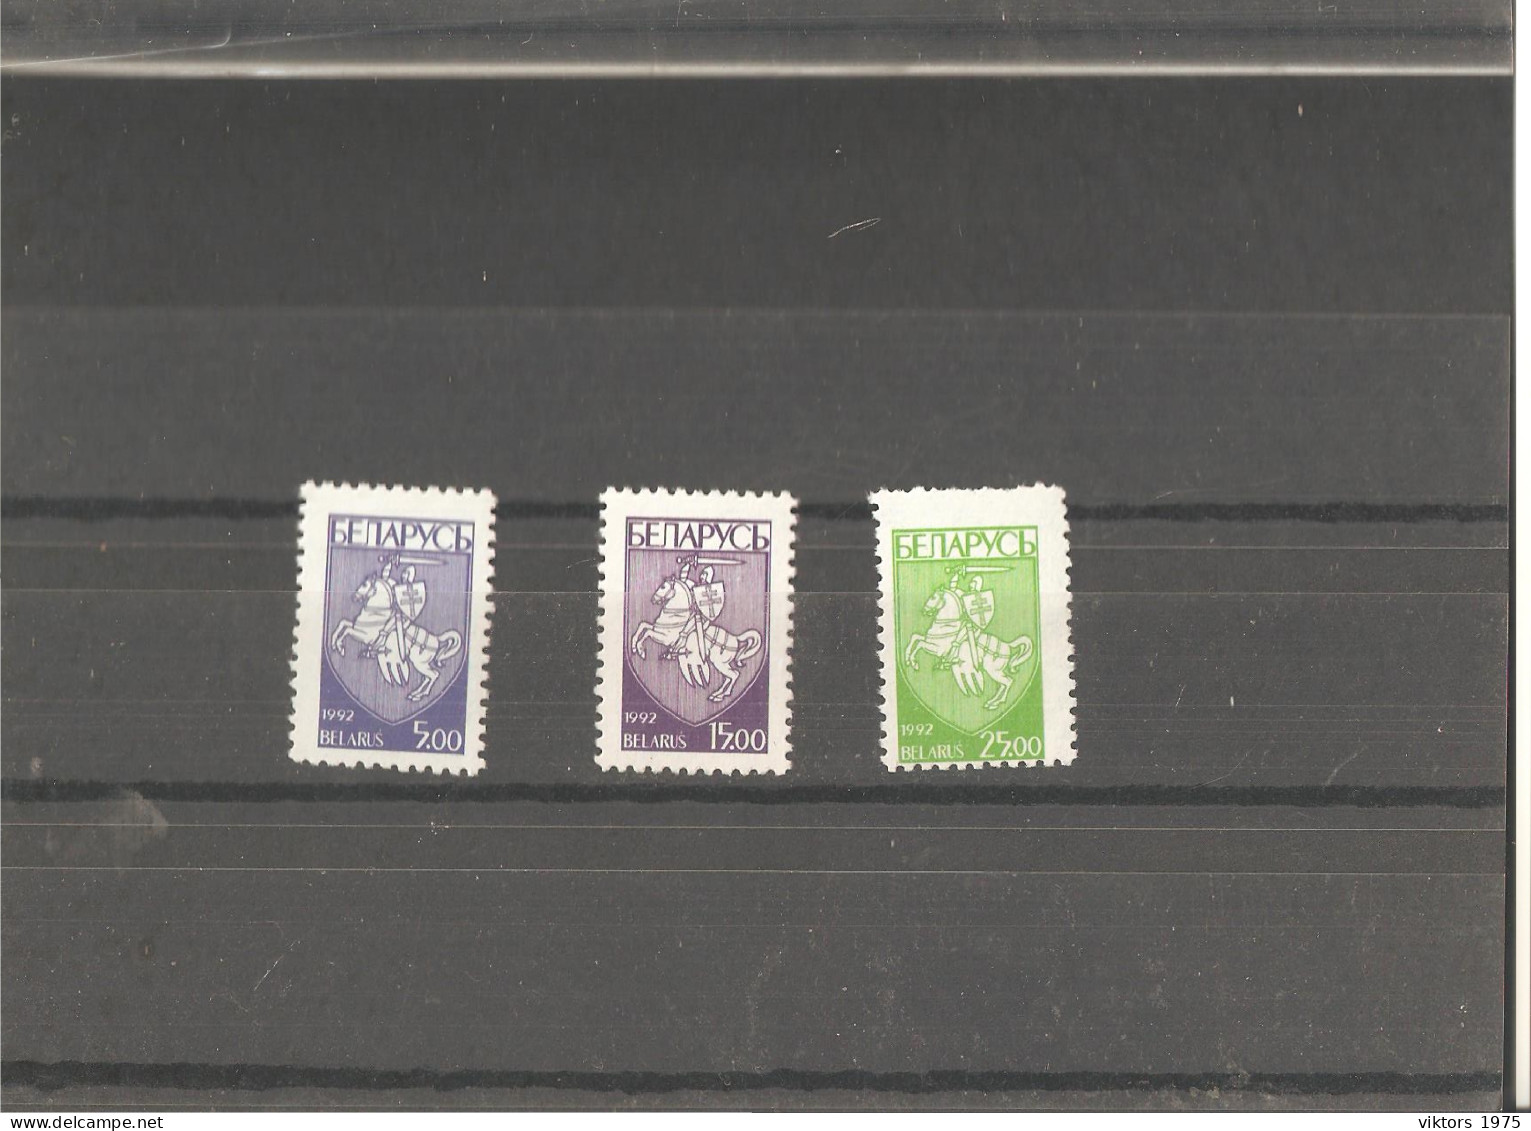 MNH Stamps Nr.25-27 In MICHEL Catalog - Belarus